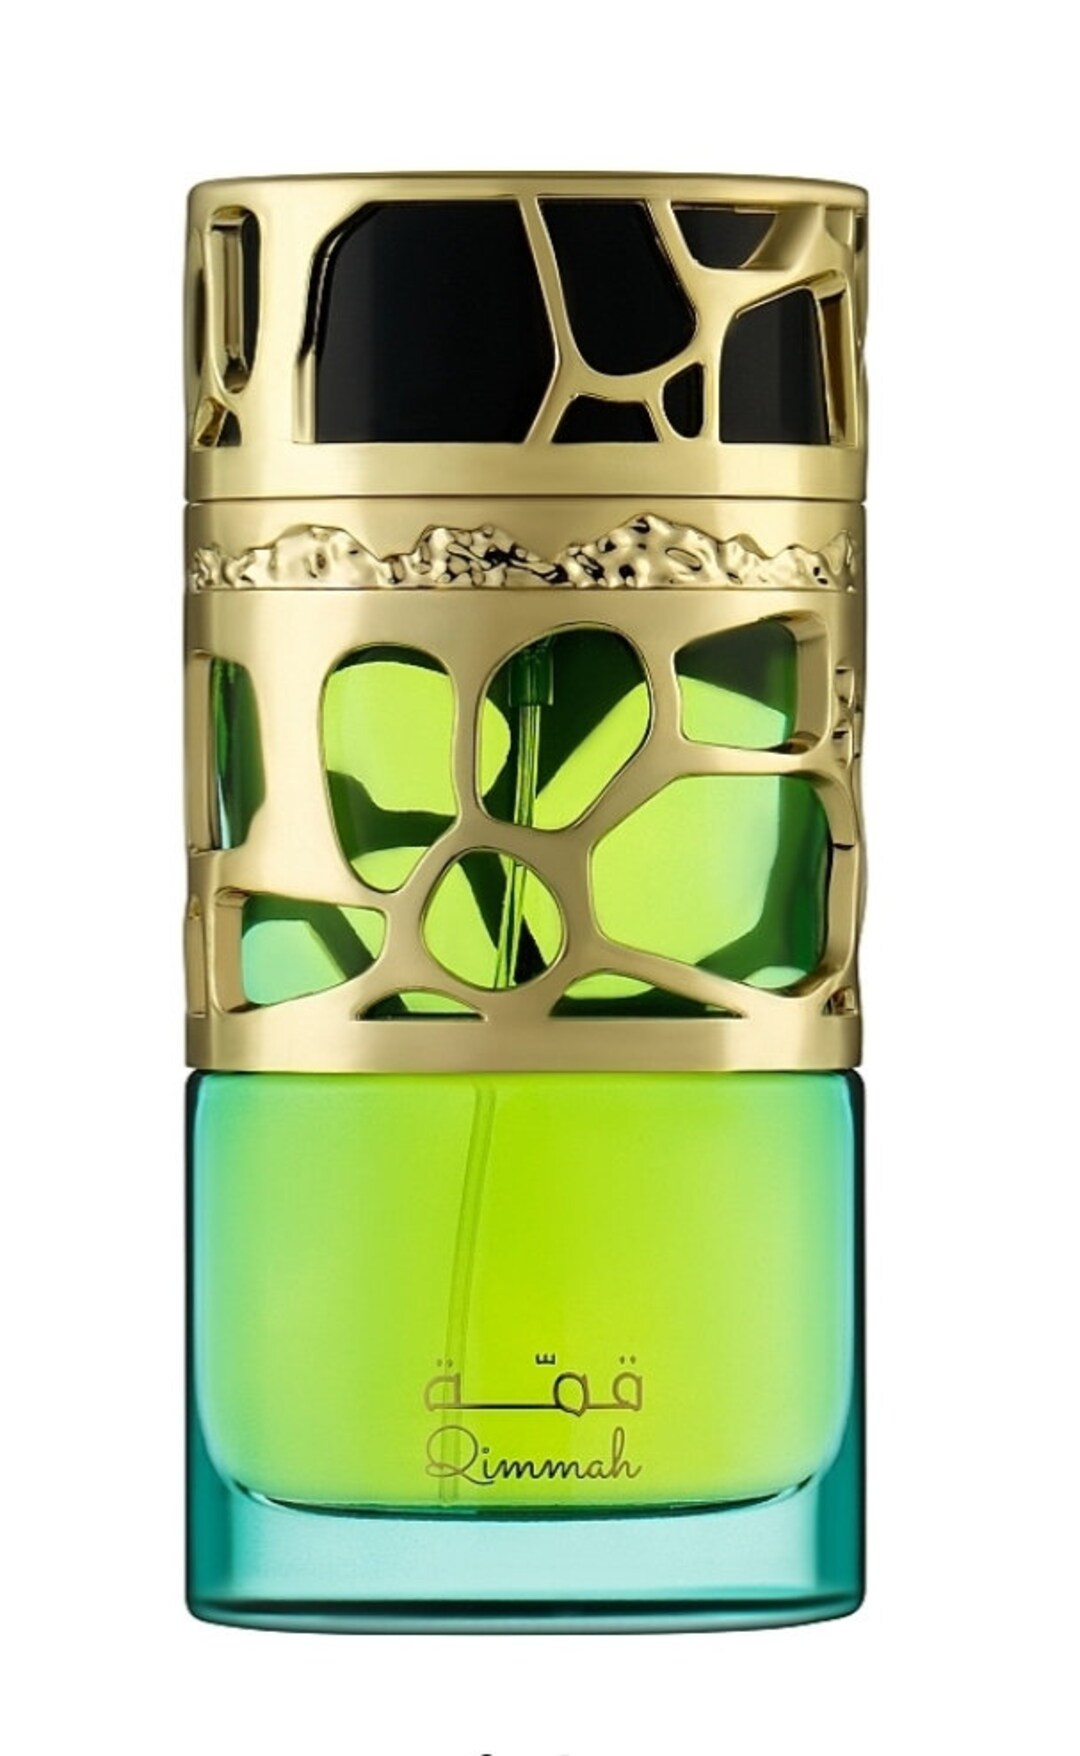 Quimmah Lataffa Original Perfume 100 Ml. Inspiration to the - Etsy